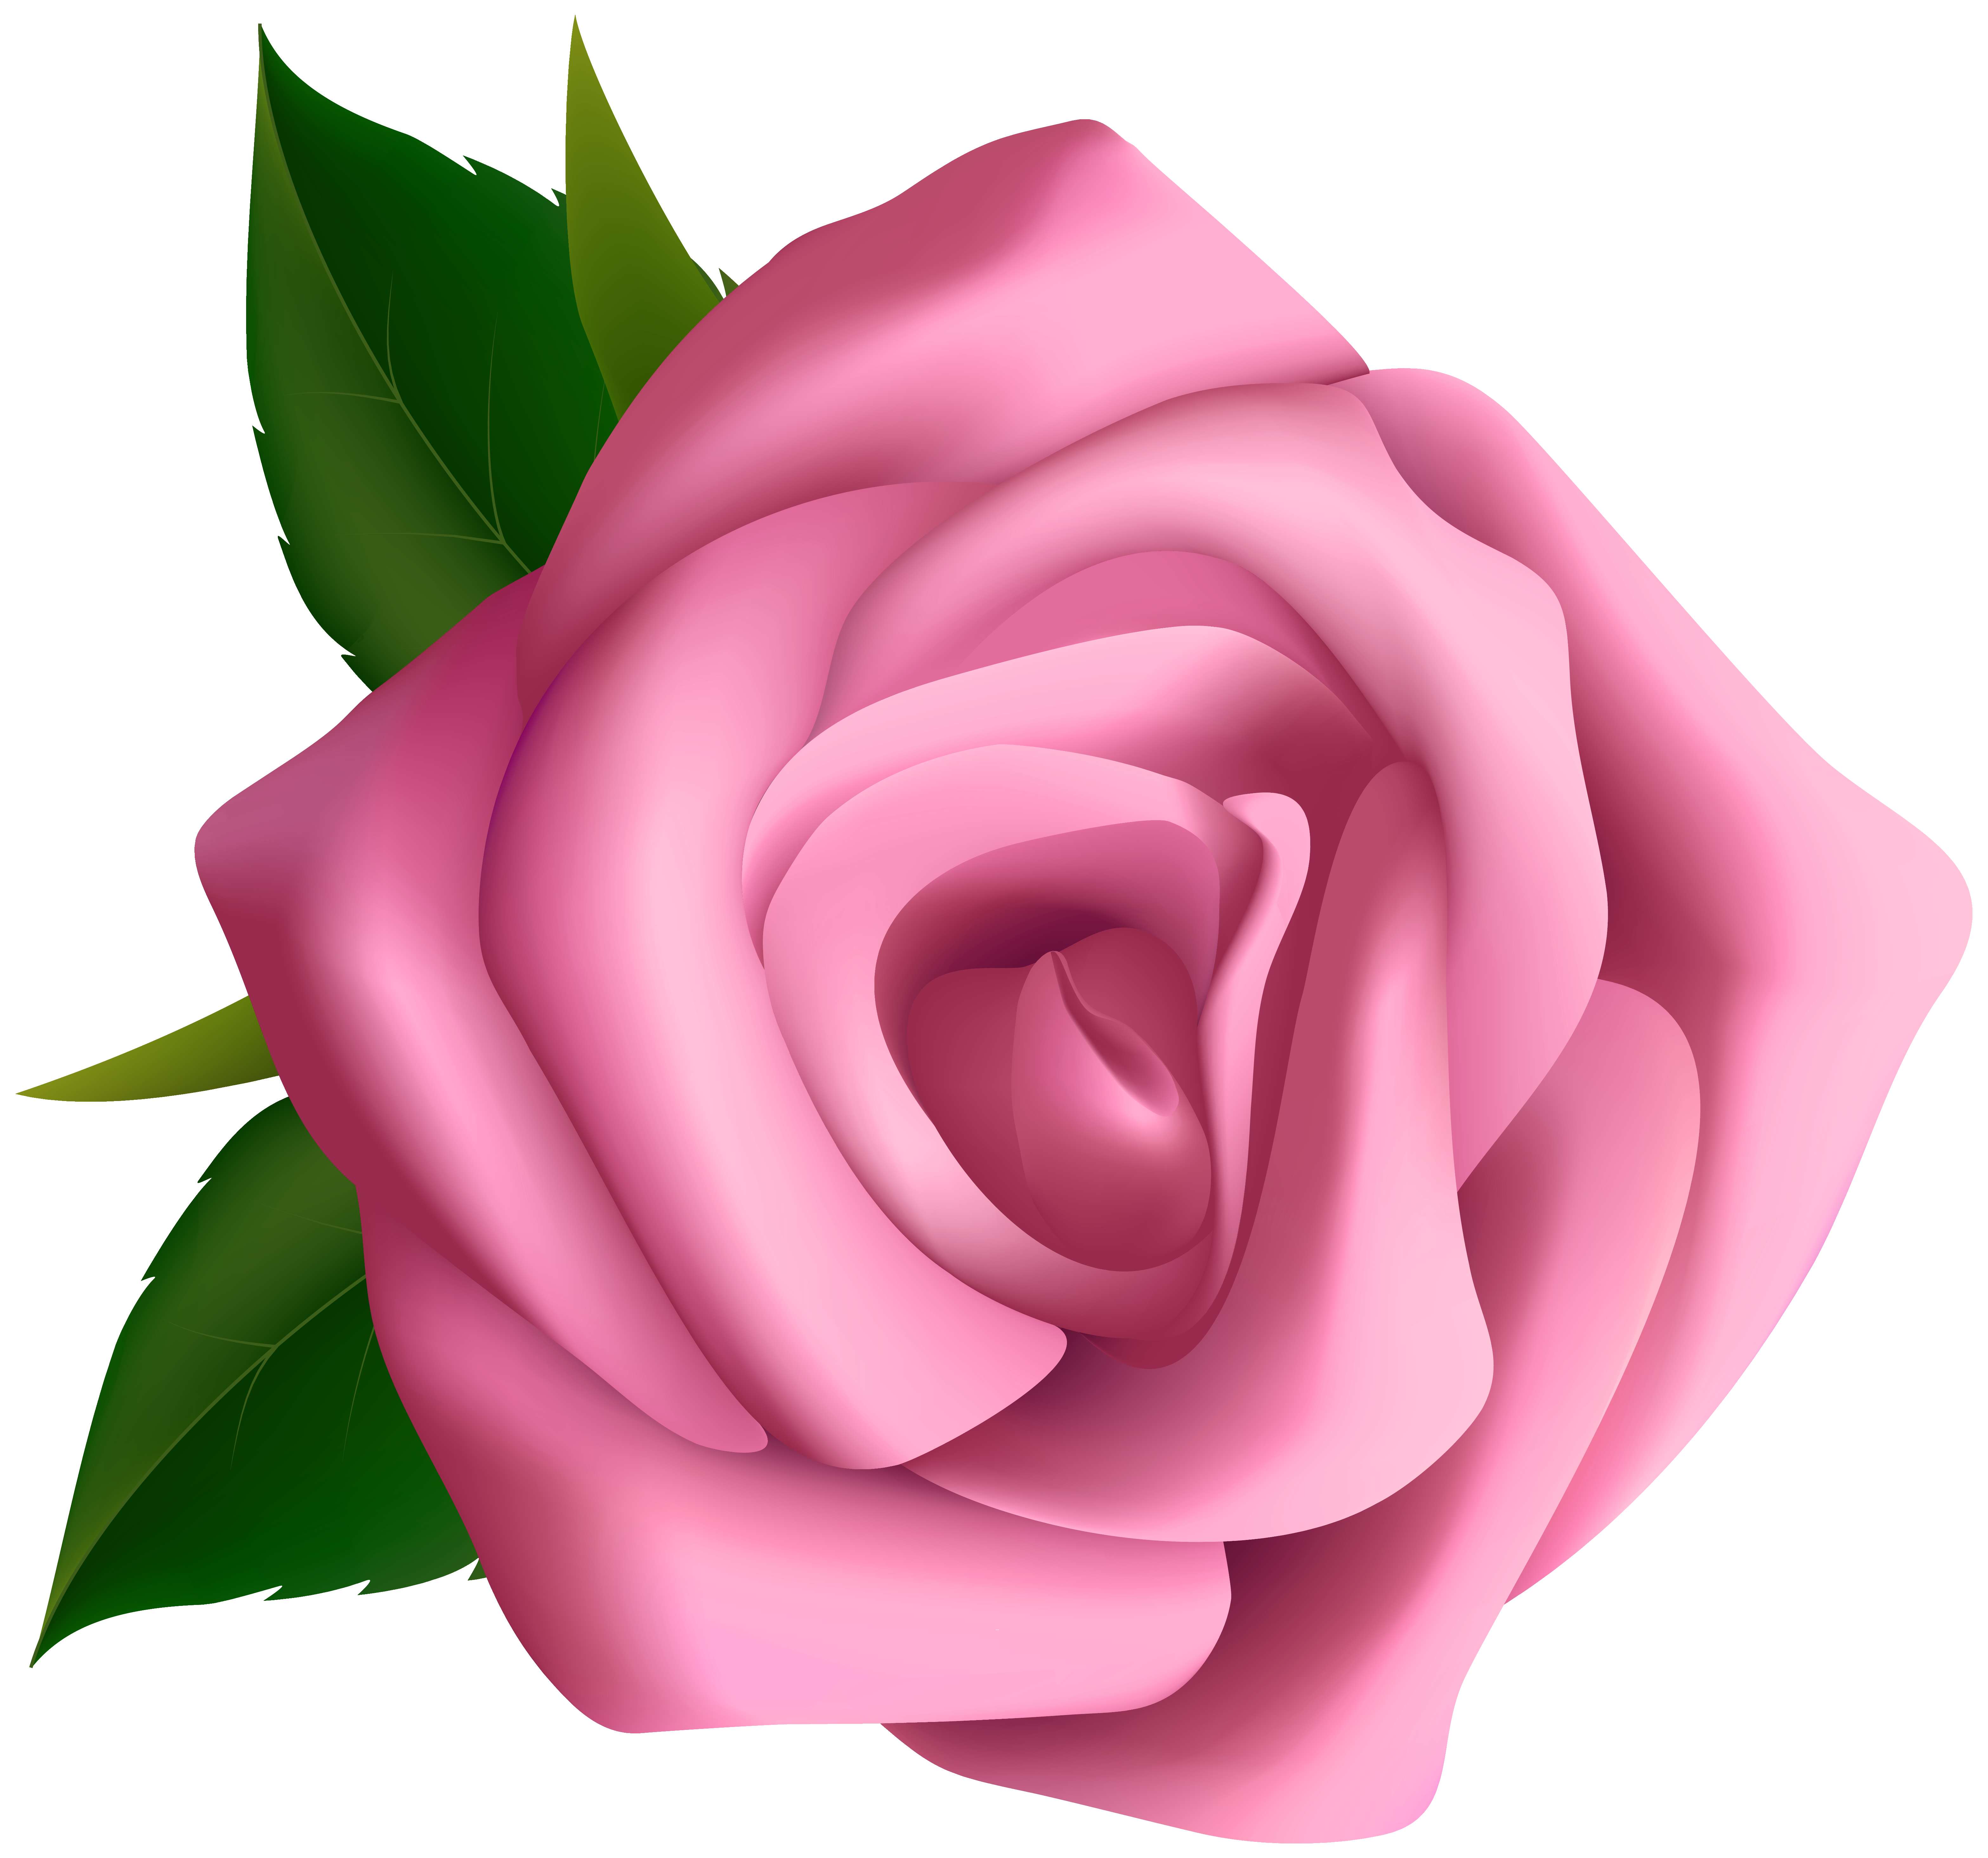 Soft pink rose.